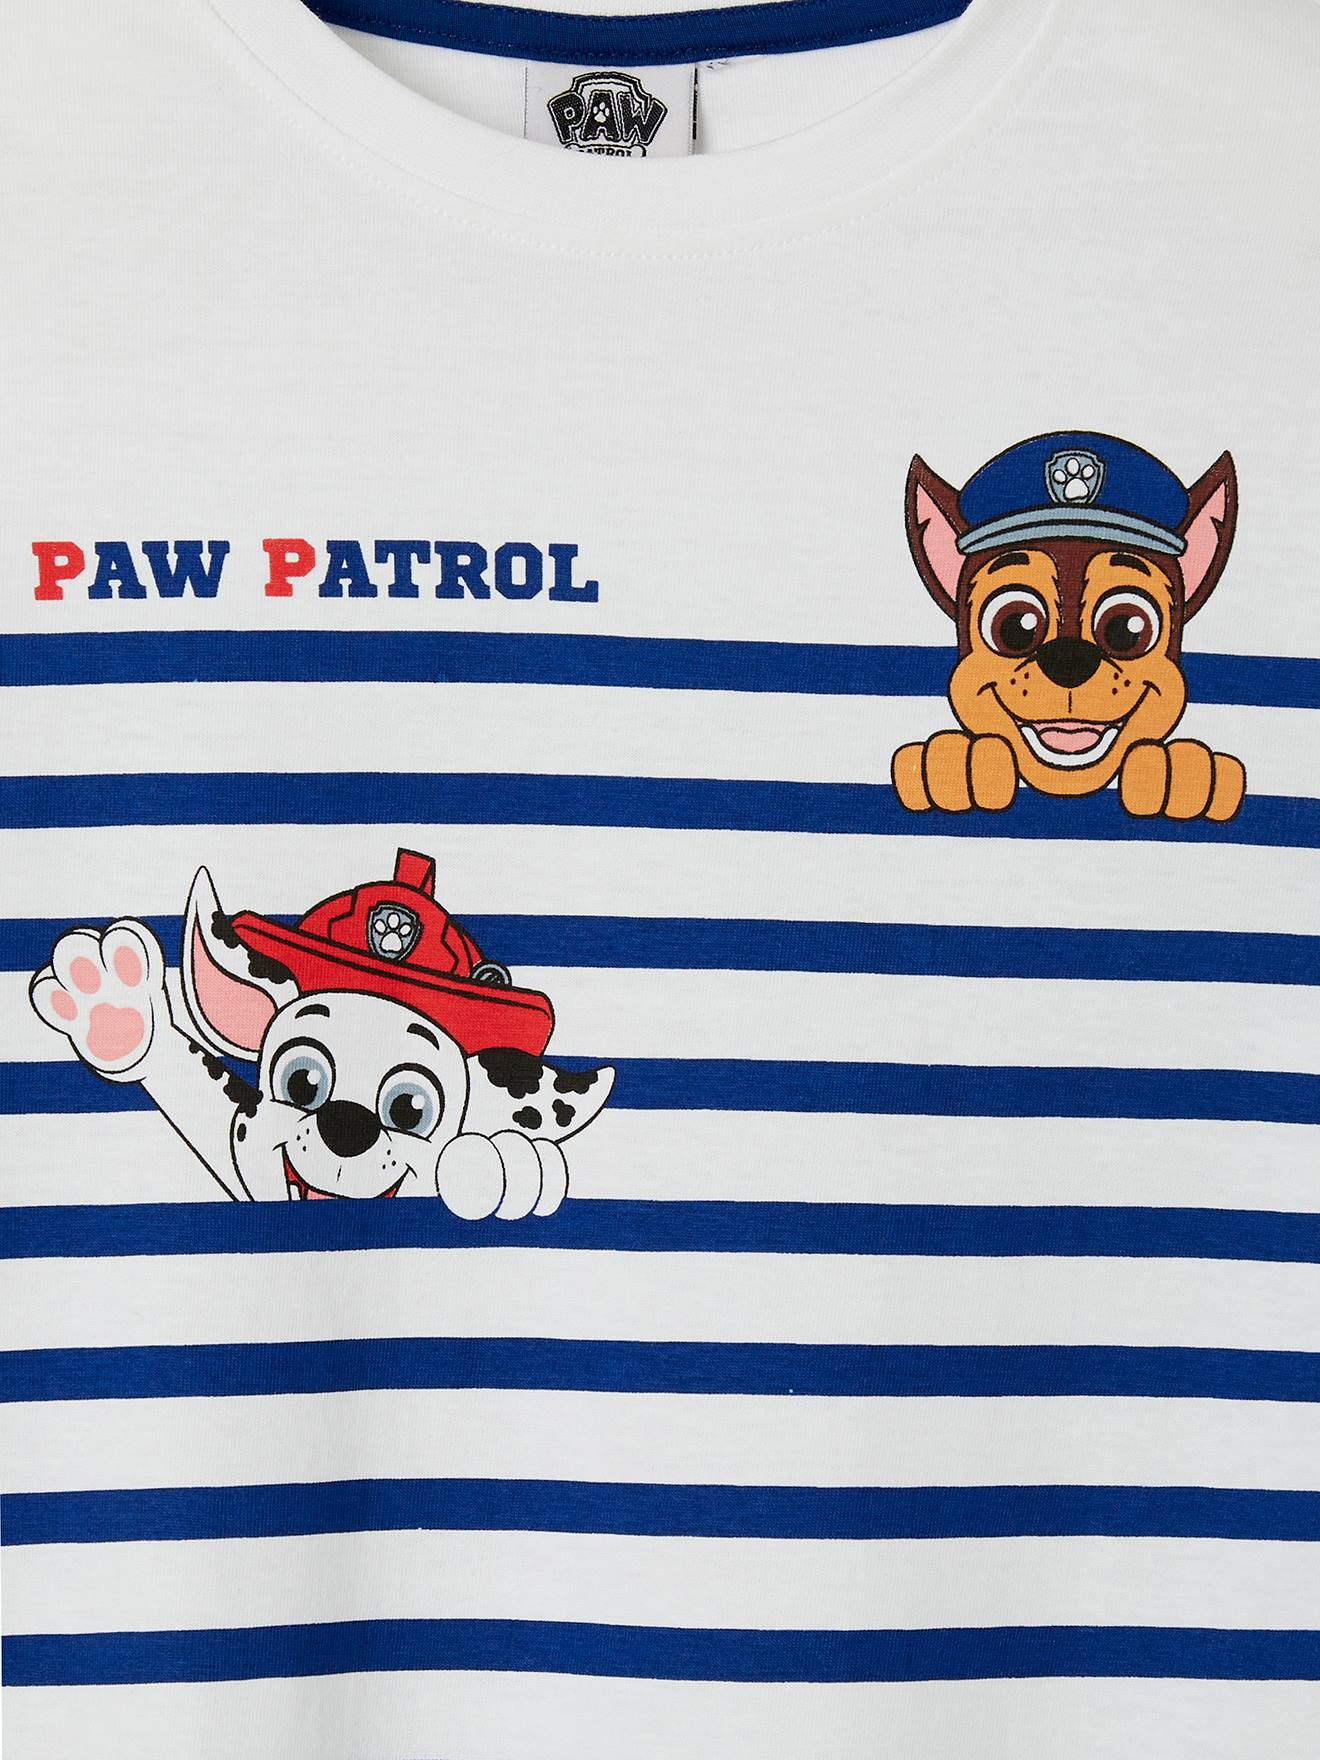 Paw Patrol® T-shirt for Boys - Boys light striped, white